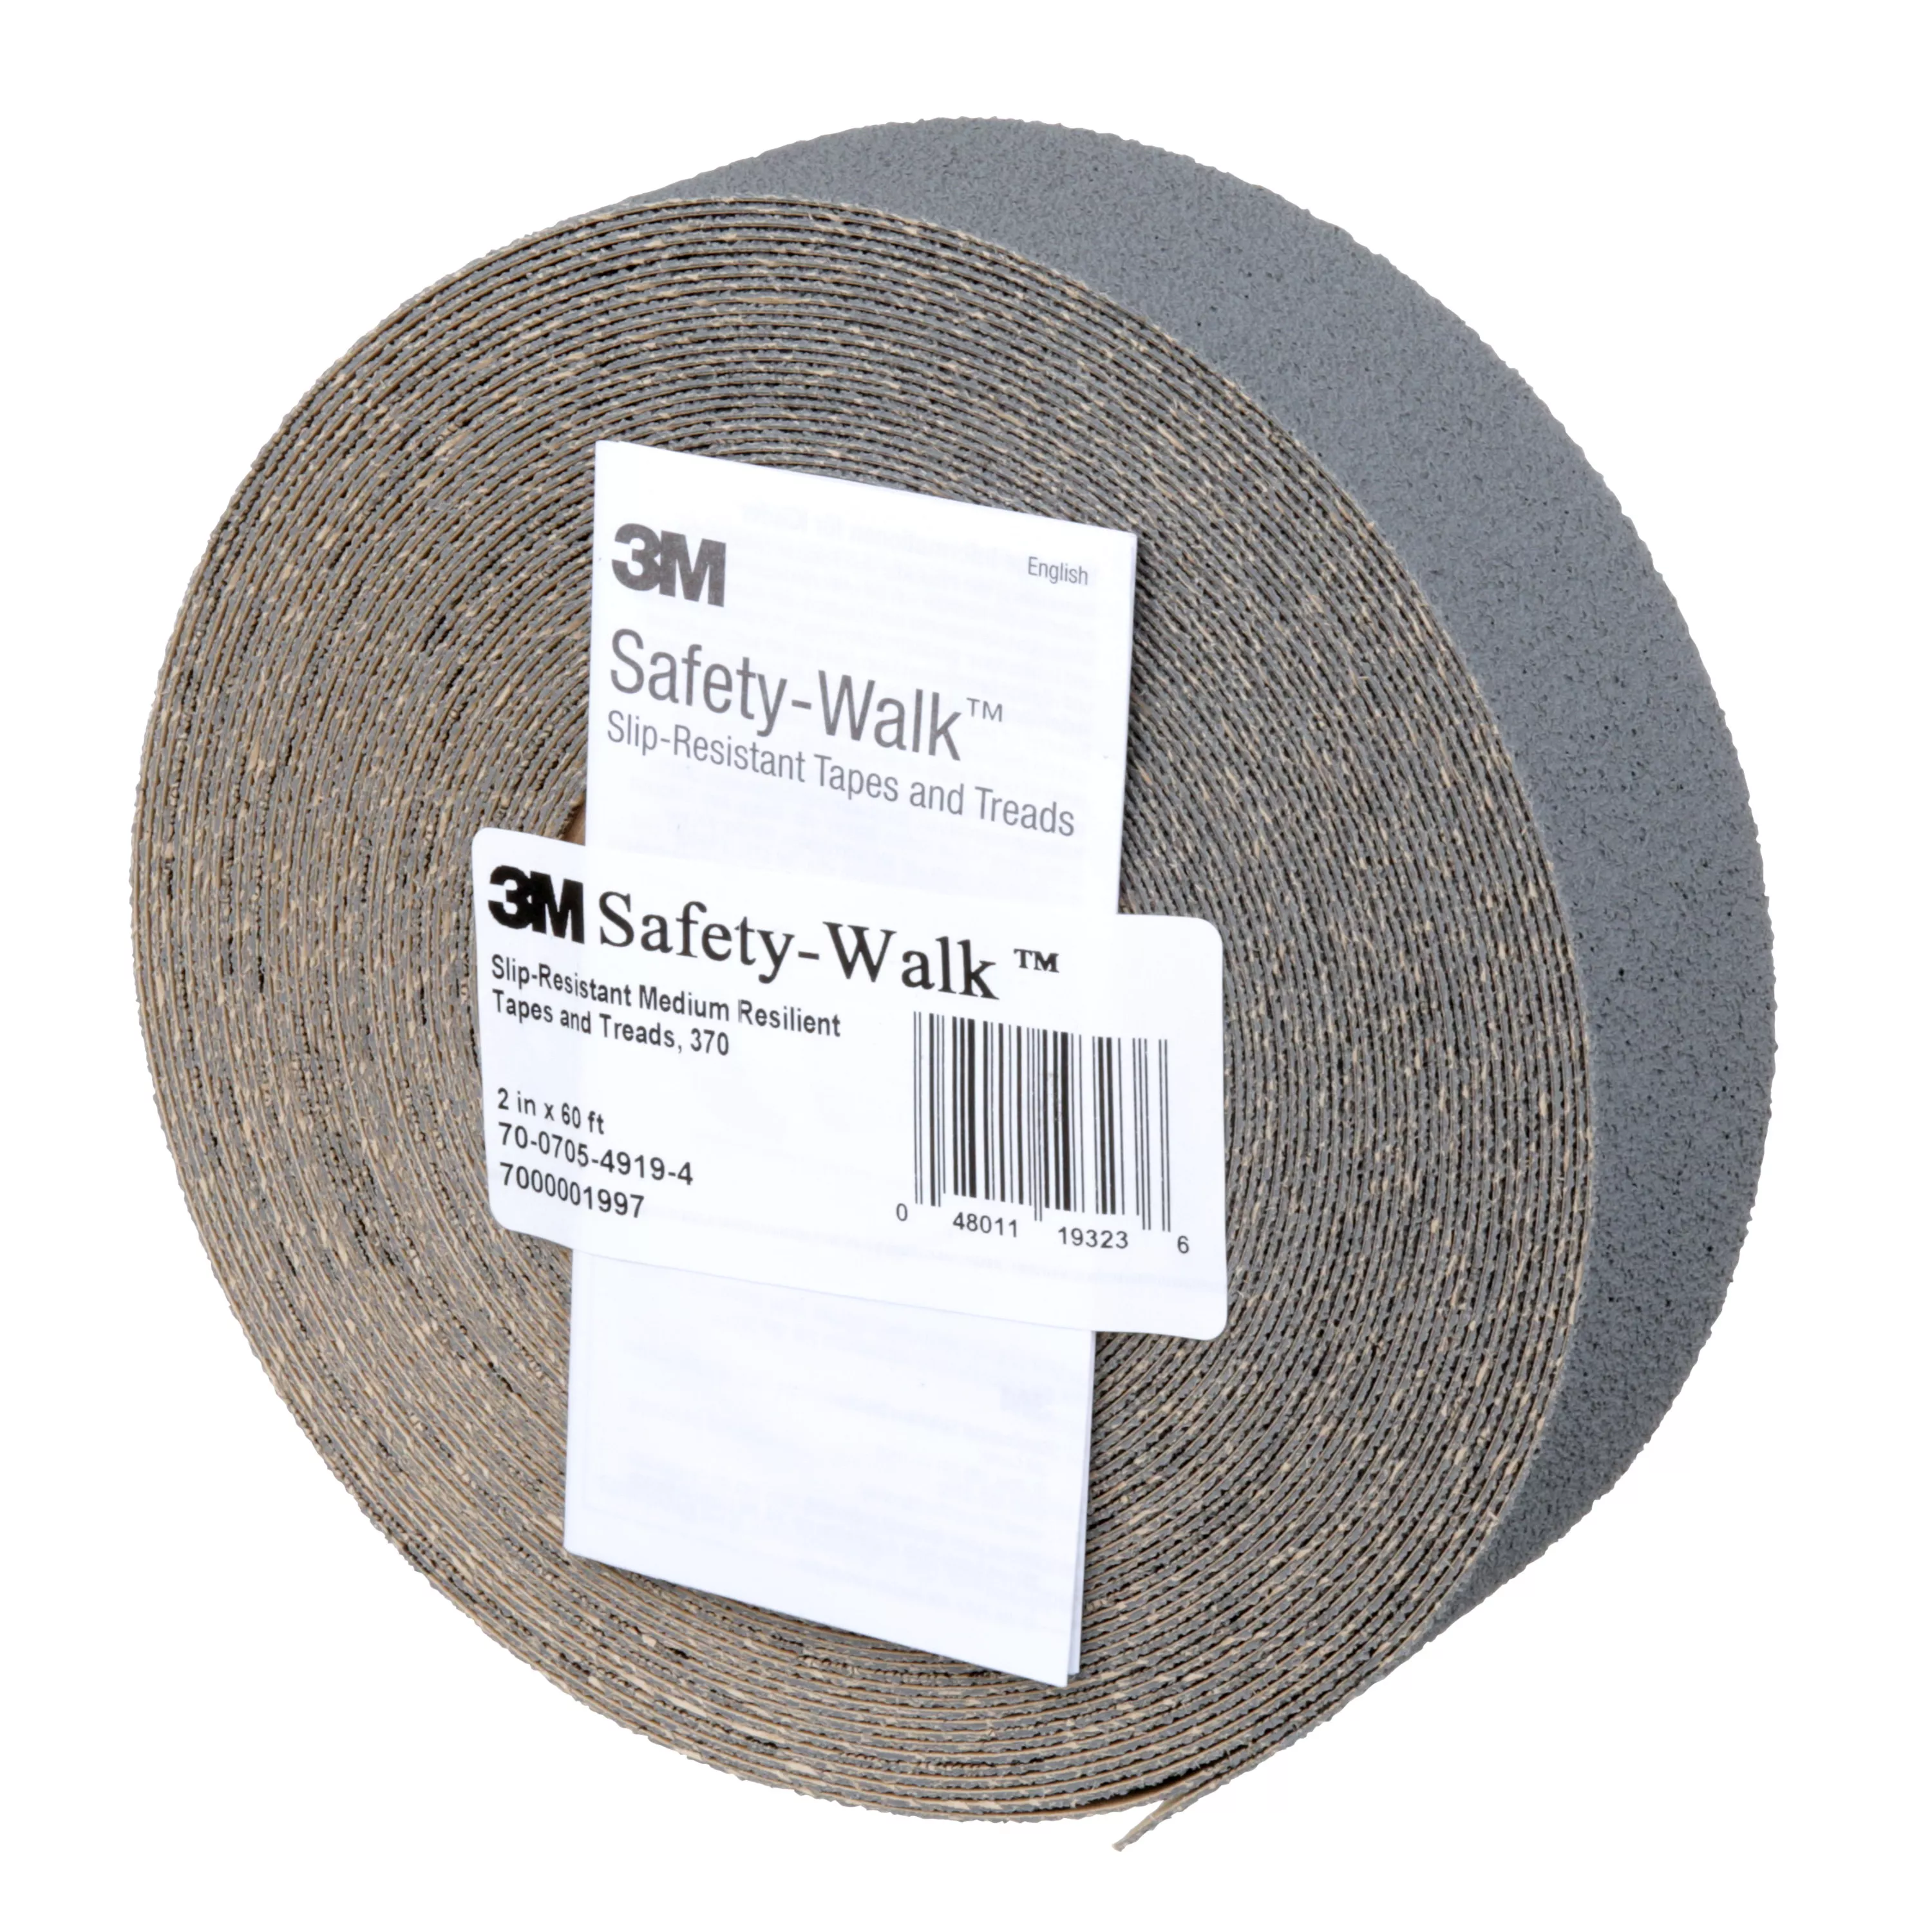 SKU 7000001997 | 3M™ Safety-Walk™ Slip-Resistant Medium Resilient Tapes & Treads 370